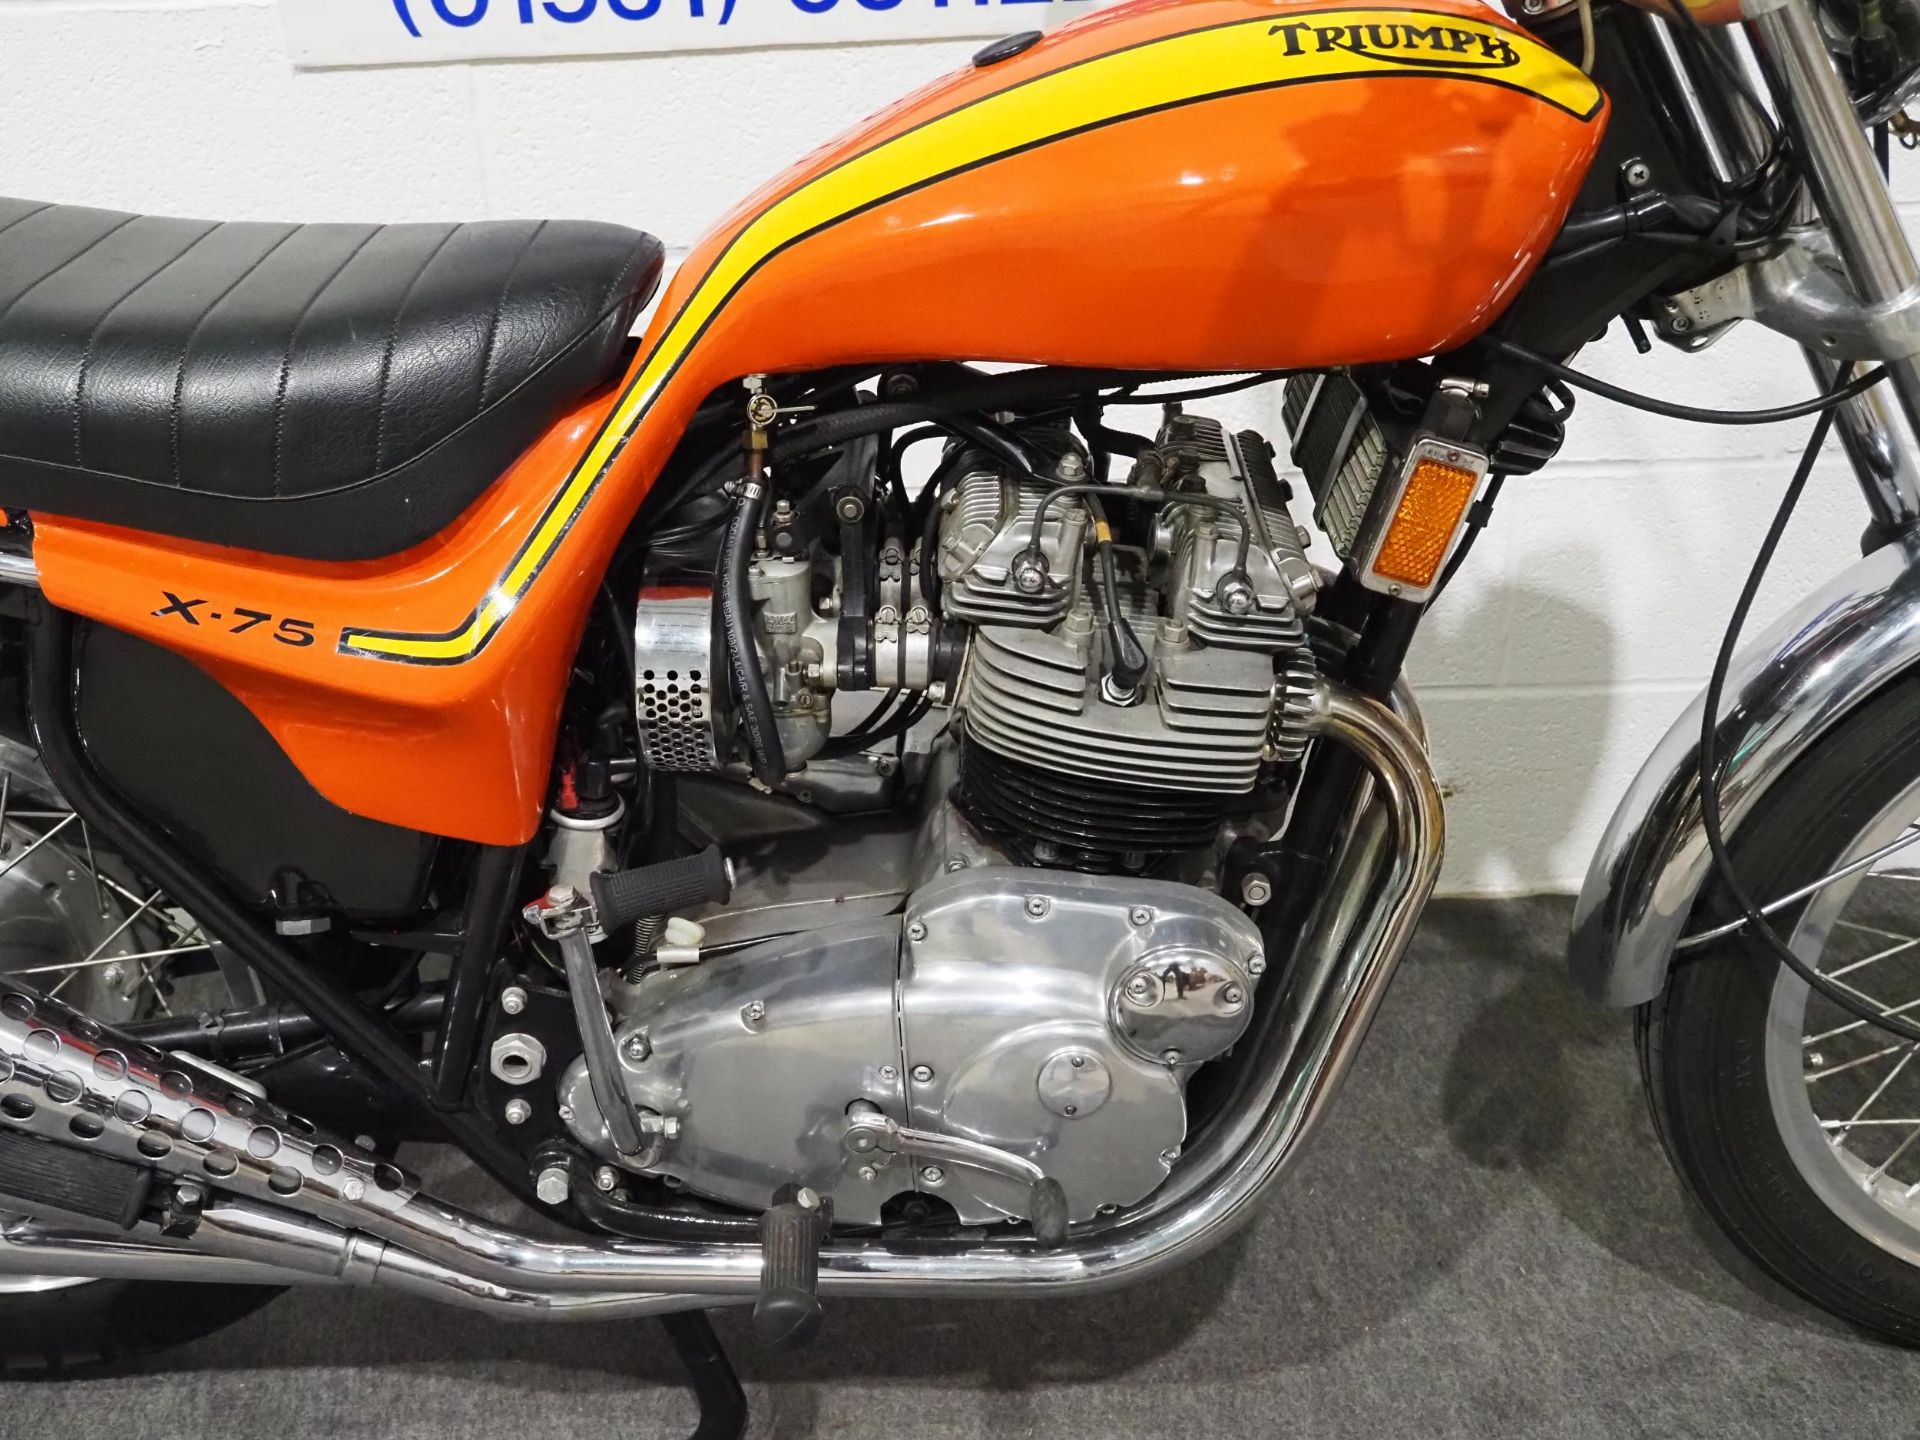 Triumph Hurricane X75 motorcycle, 1973. 744cc. Frame no. TRX75PH01438 Engine no. TRX75PH01438 Runs - Image 2 of 9